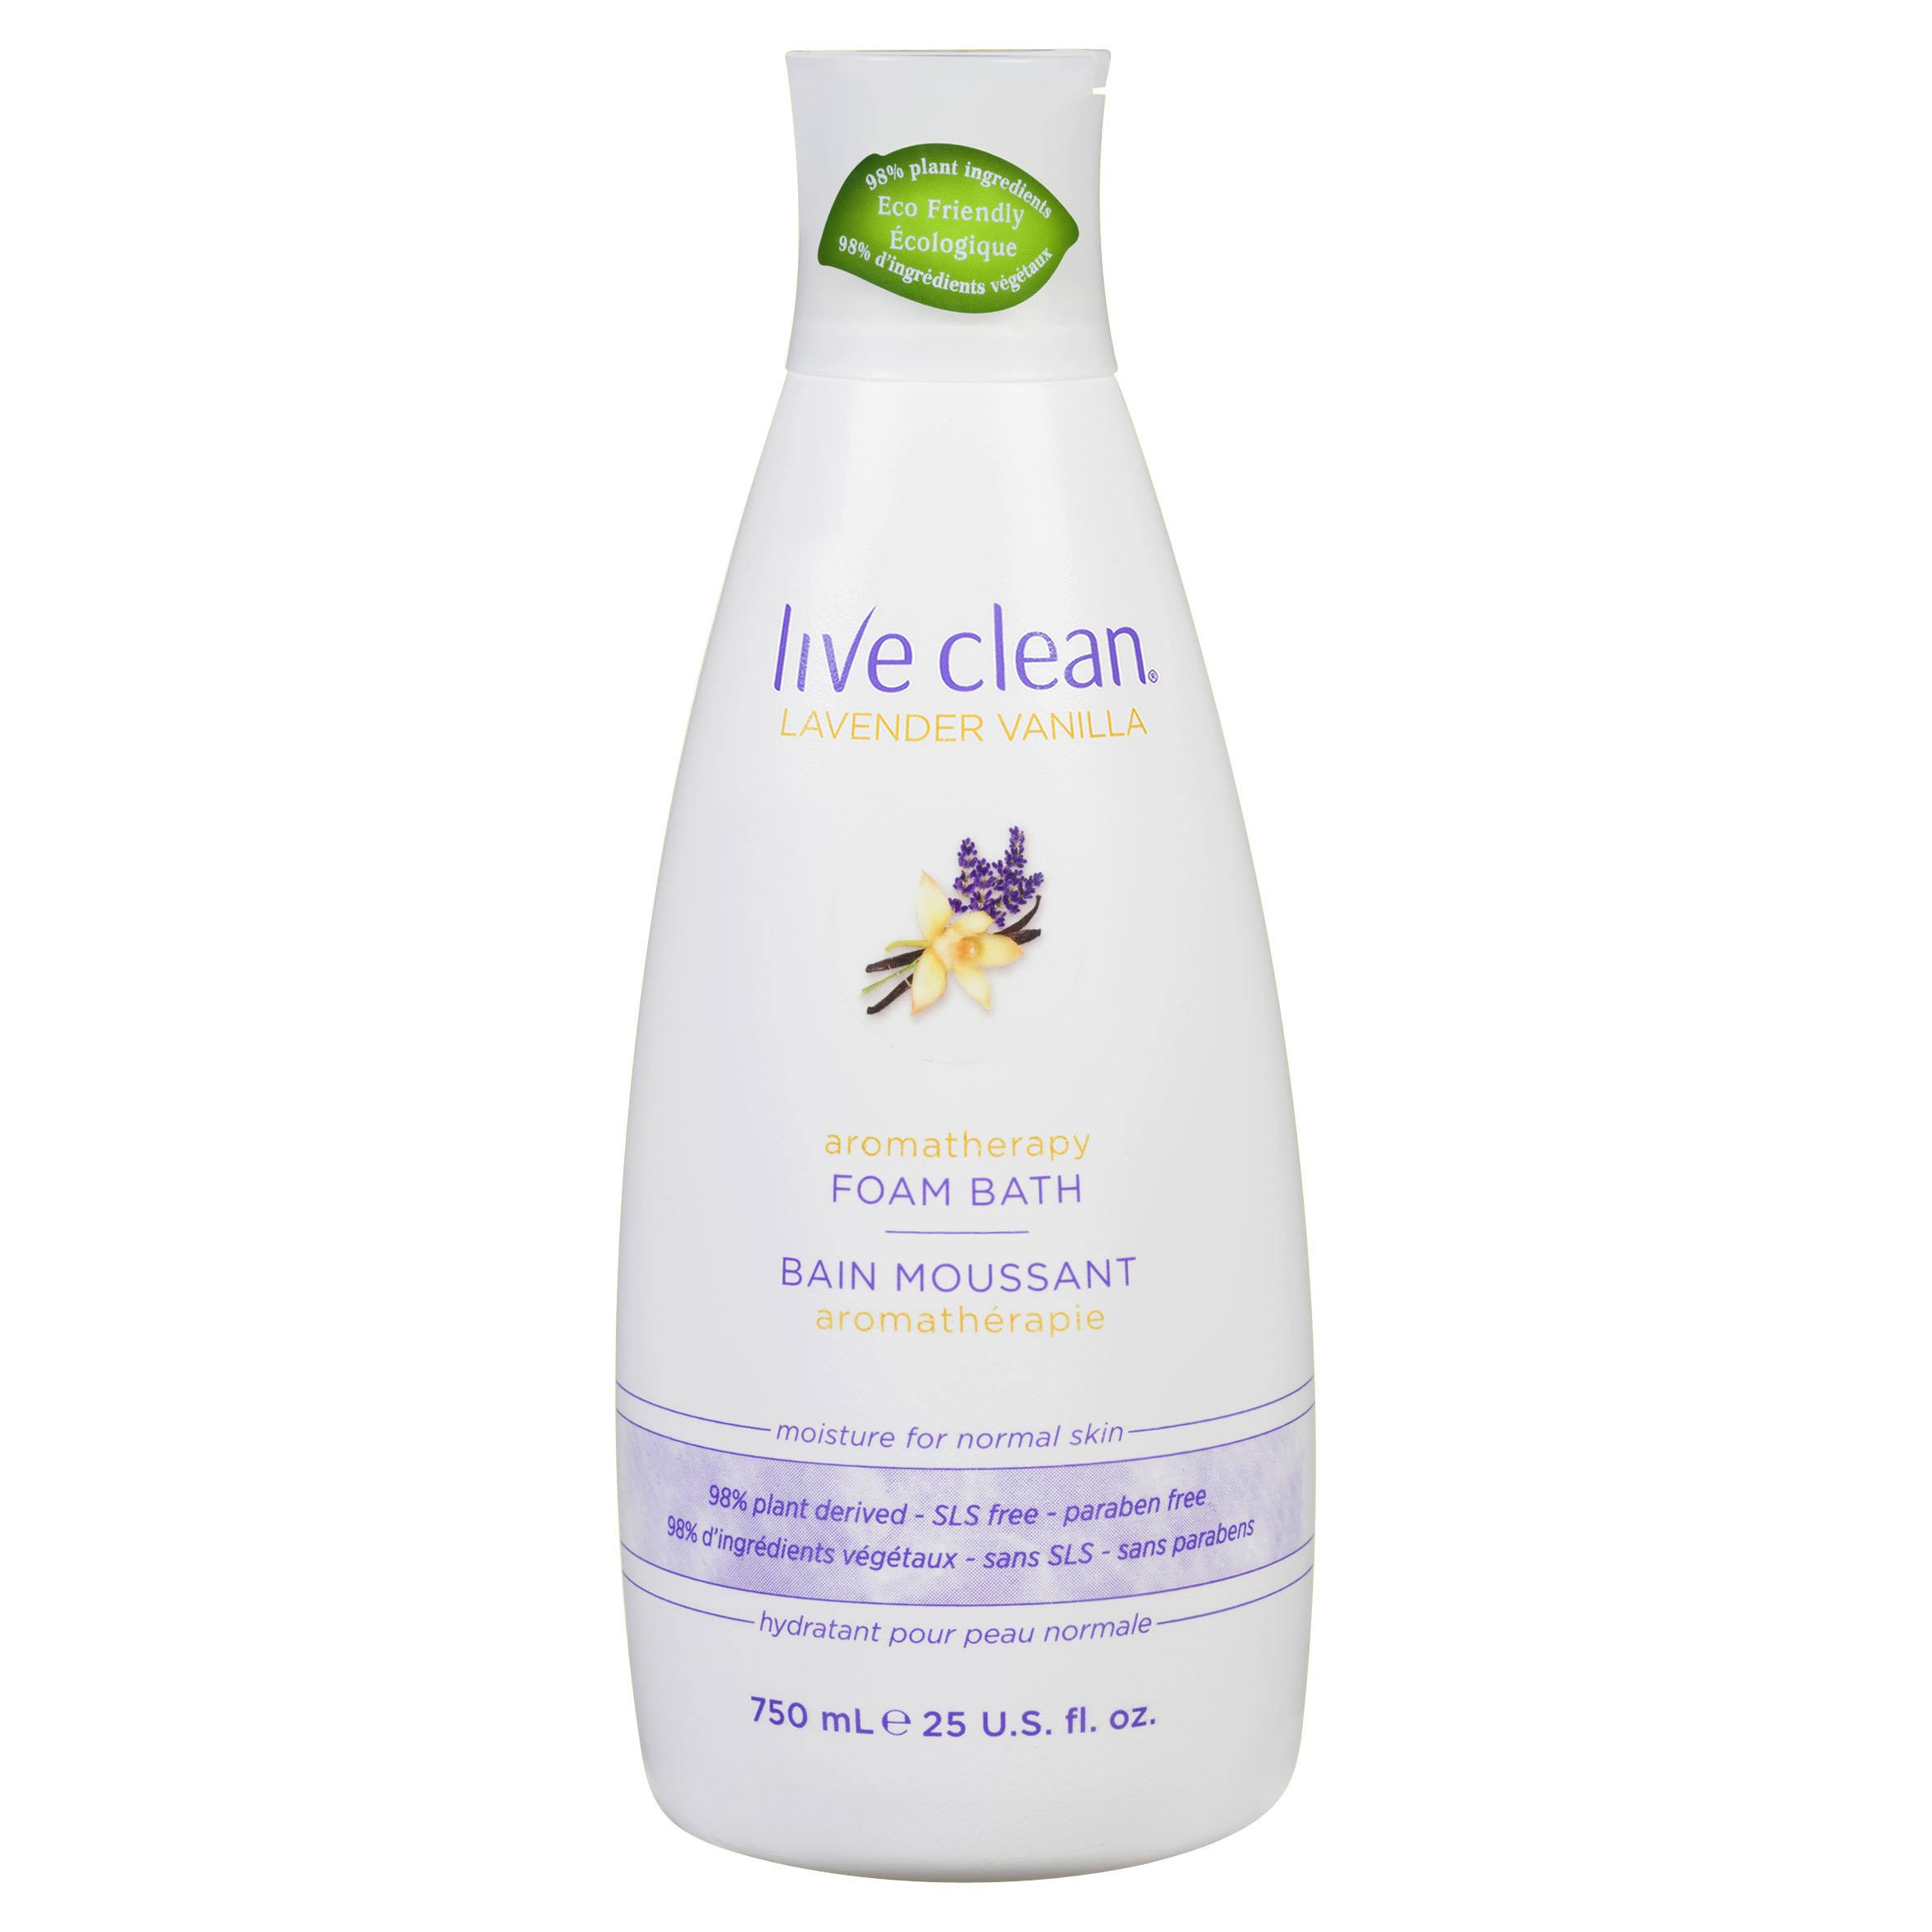 Live Clean Lavender Vanilla Aromatherapy Foam Bath - 750 ml